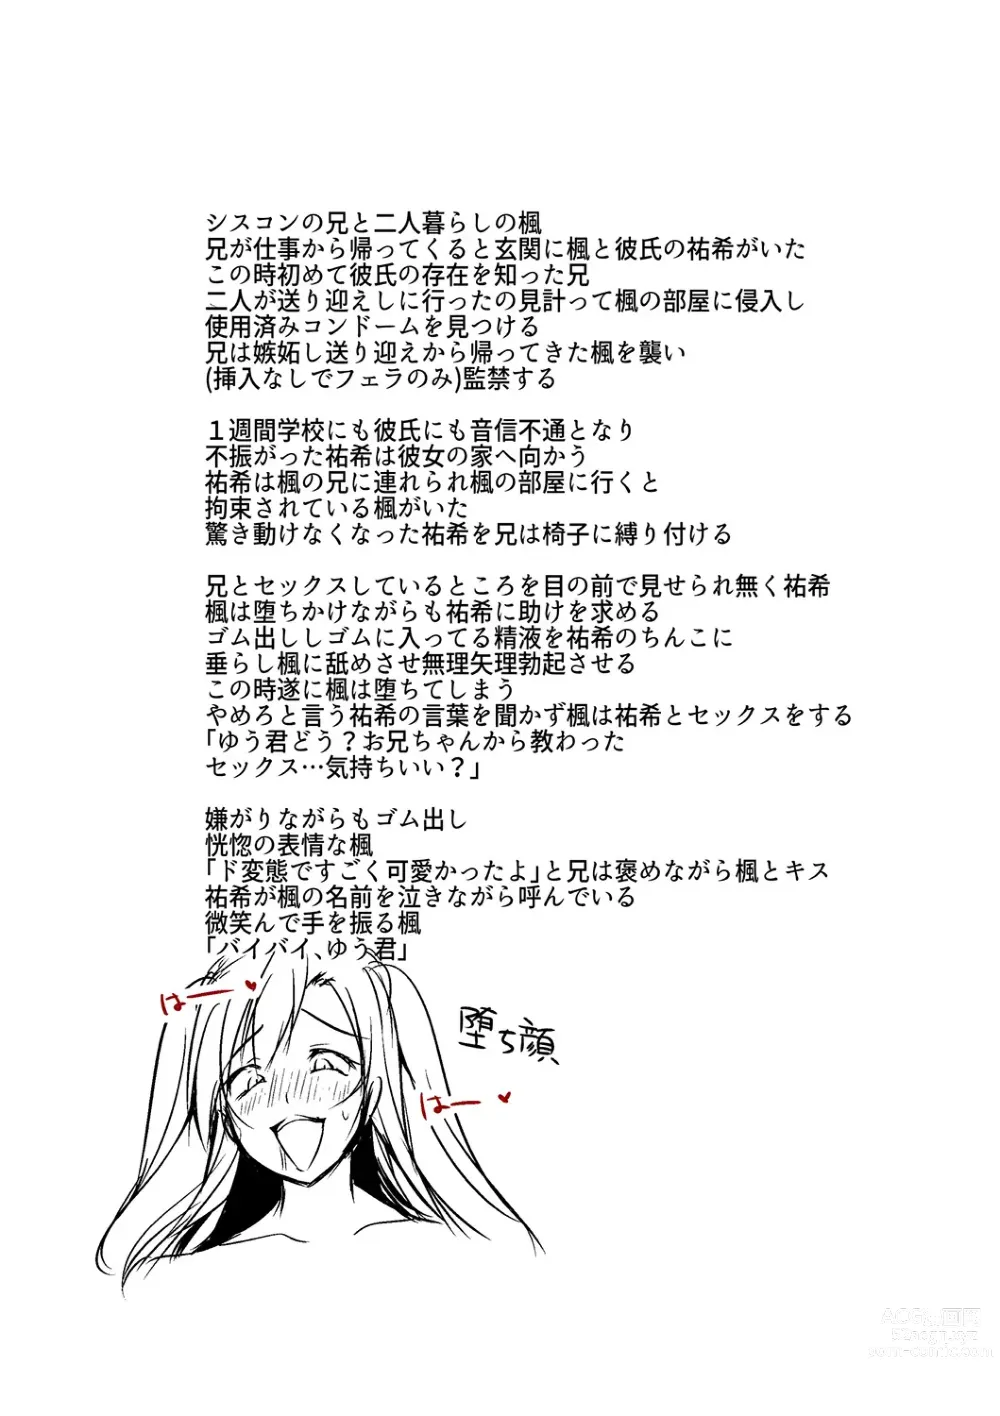 Page 215 of manga Kowashite Asobo + DLsite Gentei Chara Settei & Plot